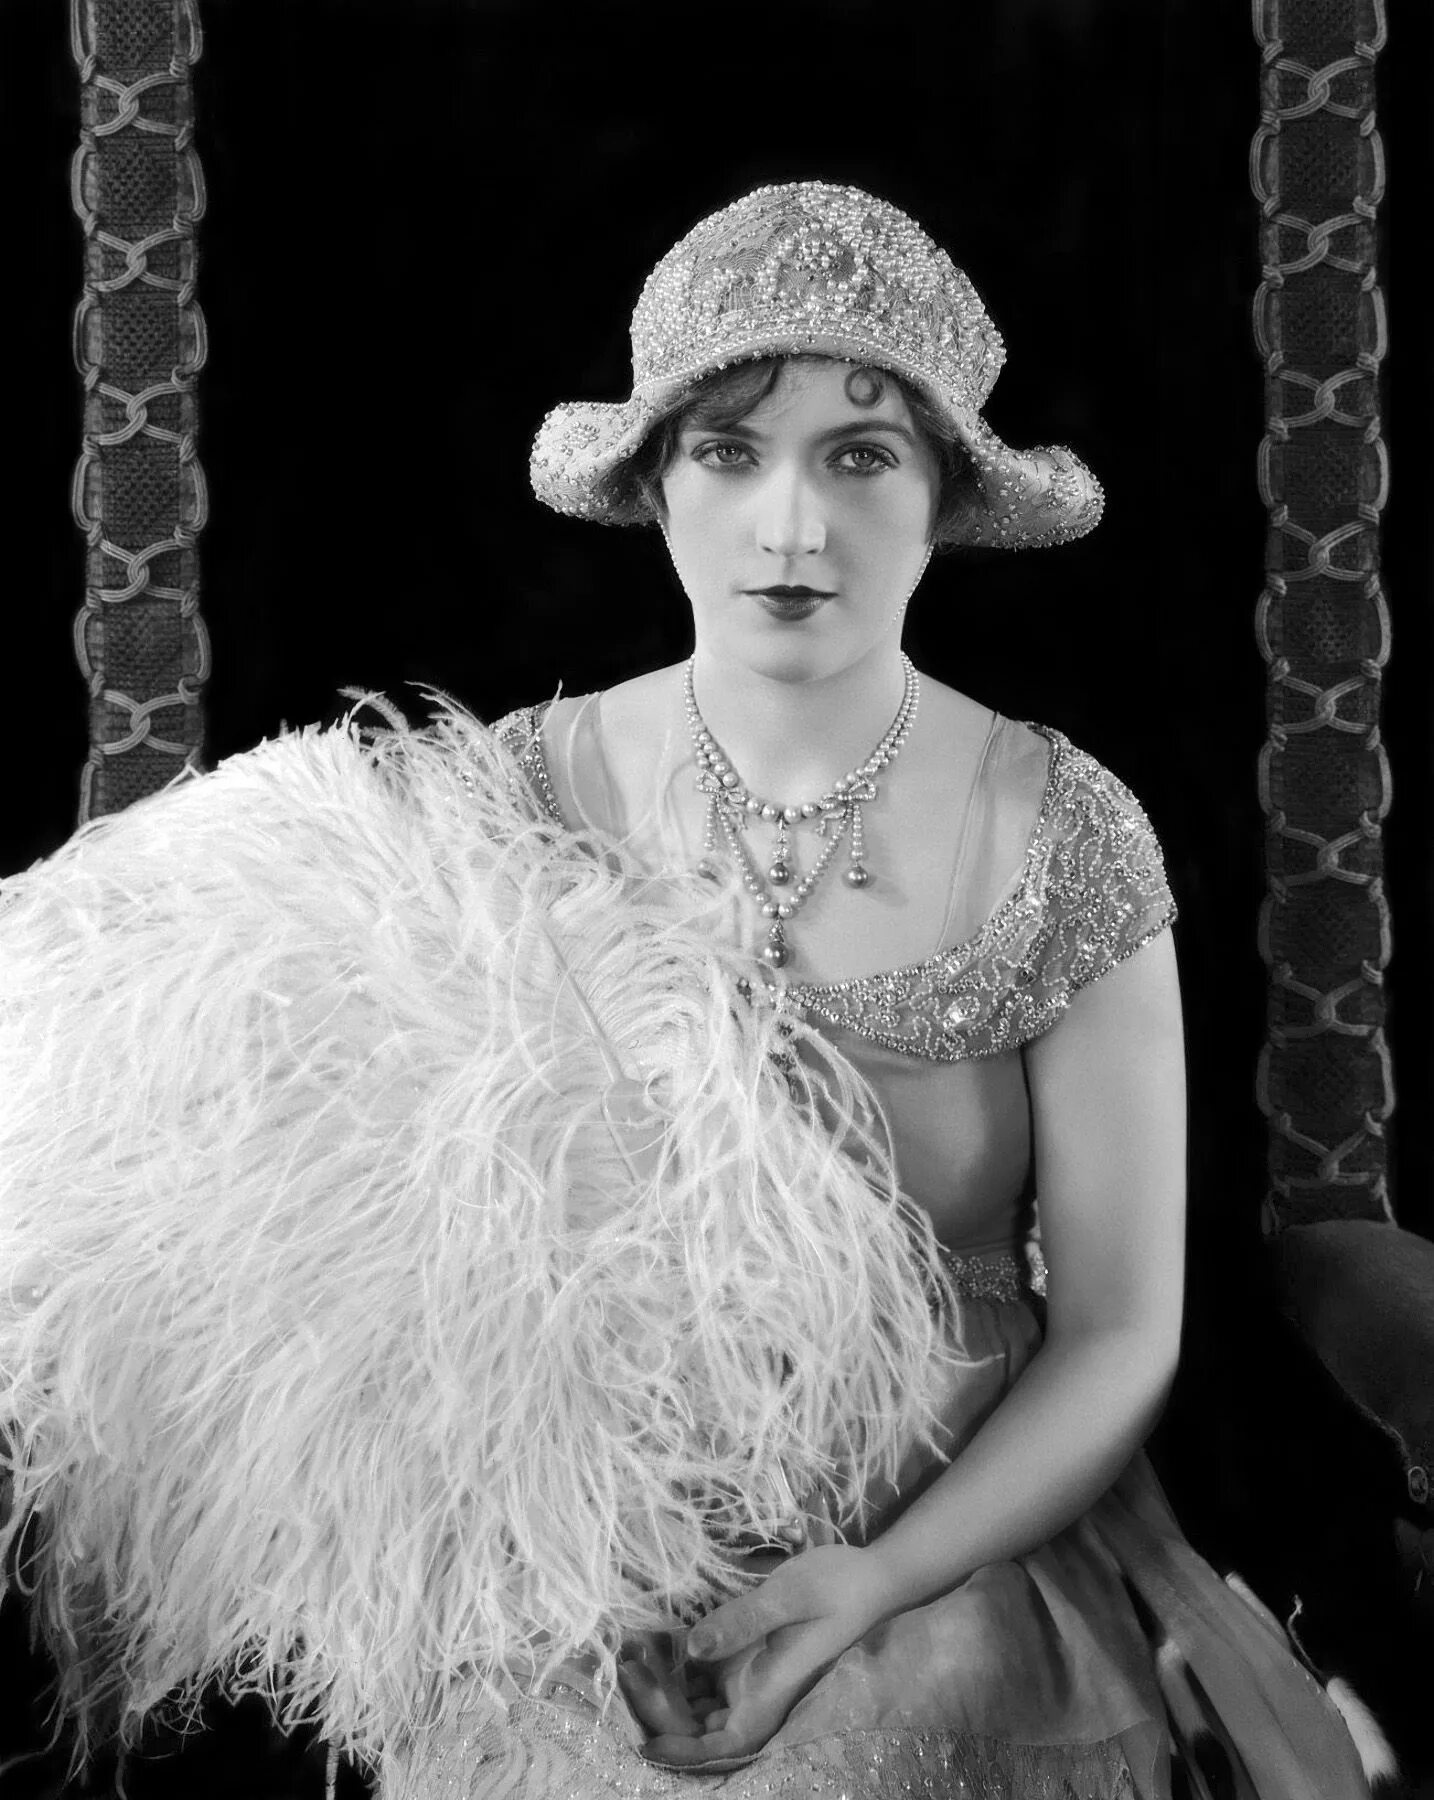 Фото 20х. Мода 1920-х годов. Марион Дэвис в 1920е. Мода 20х годов 20 века. Девушки из варьете Ziegfeld Follies.